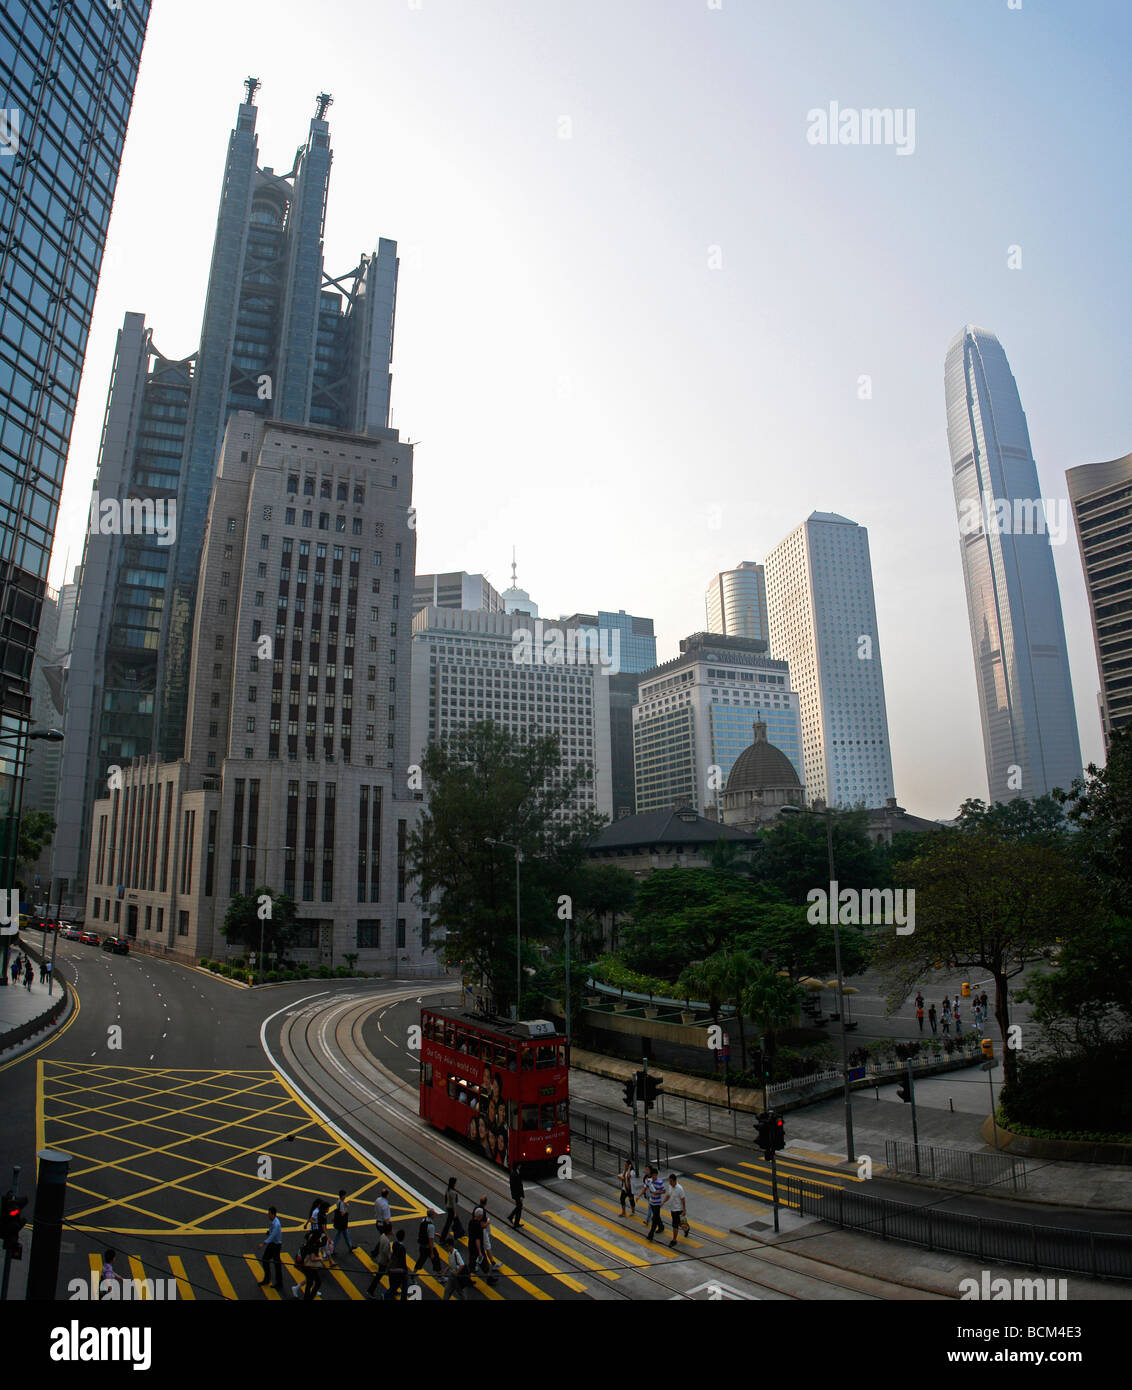 China Hong Kong financial central district skyscrapers and bank HSBC Stock Photo